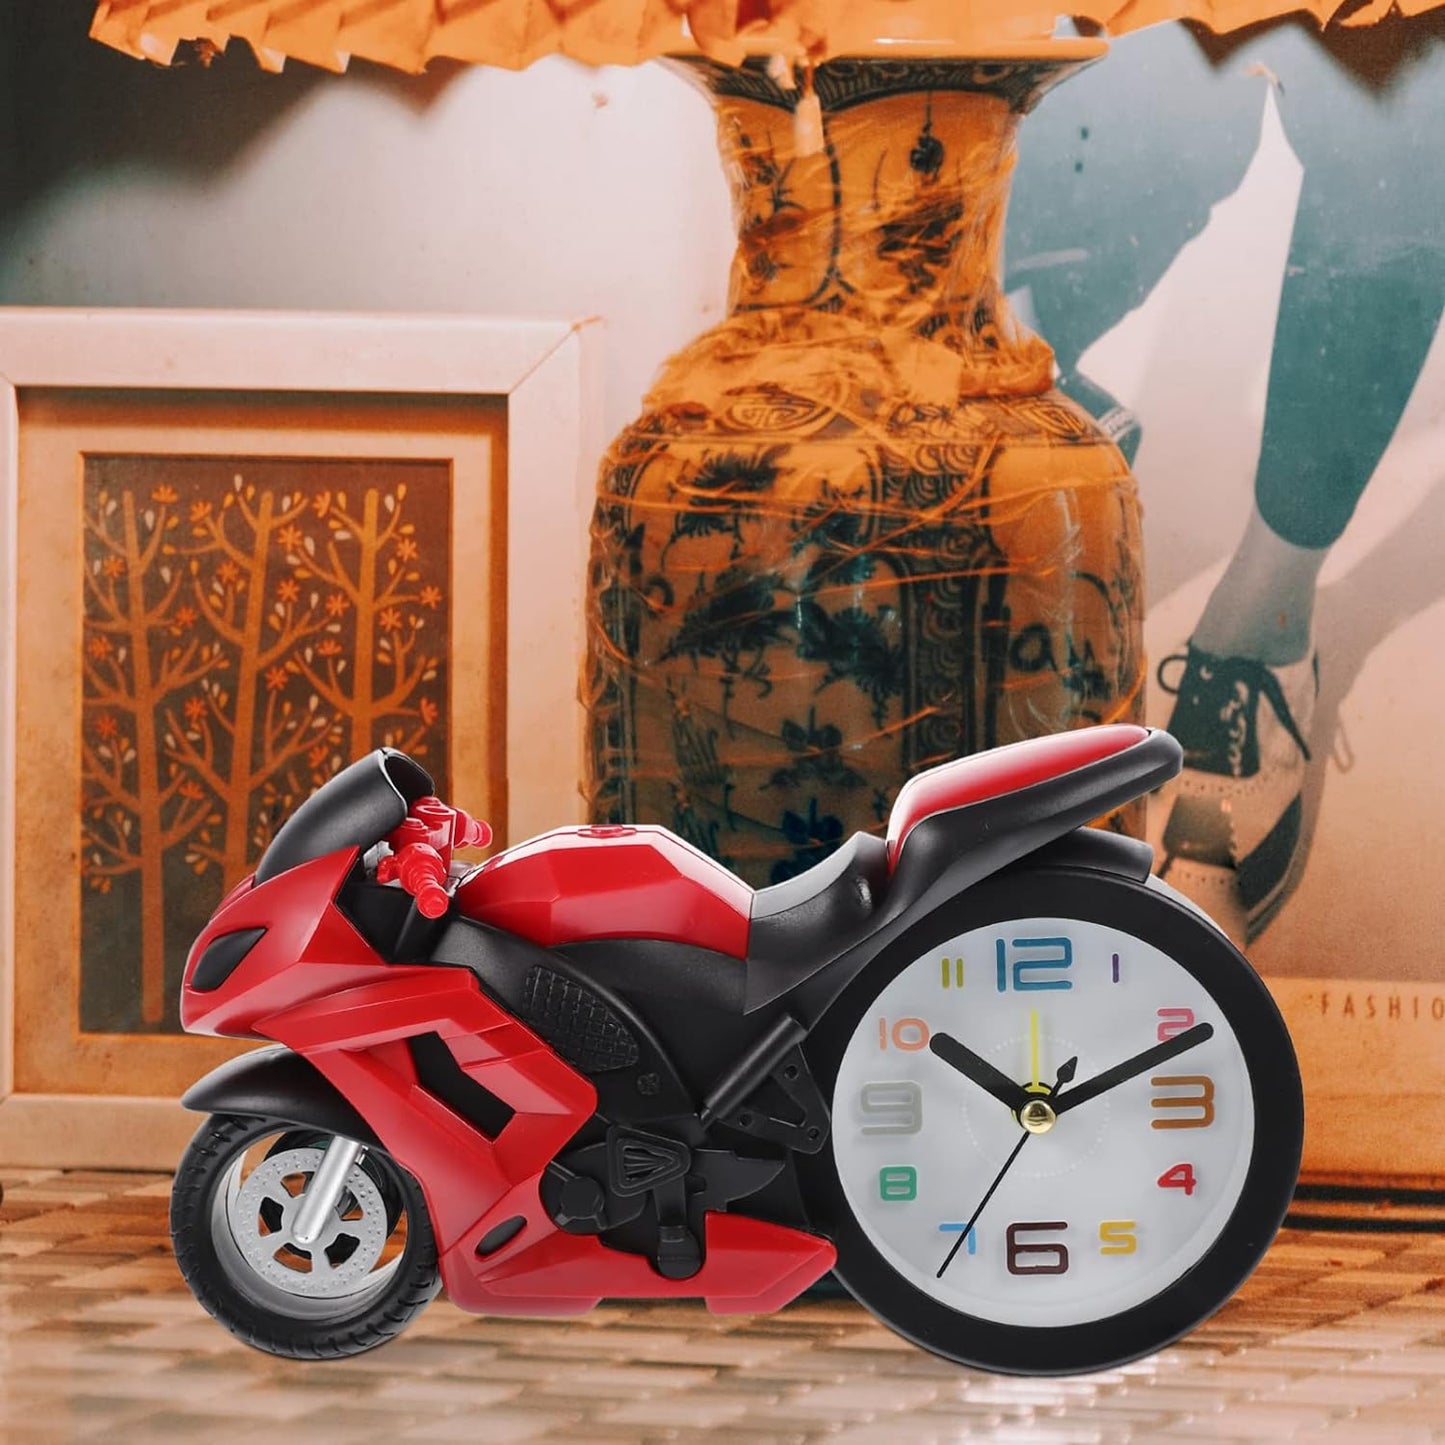 Kadio Analog Red Clock Motorcycle Model